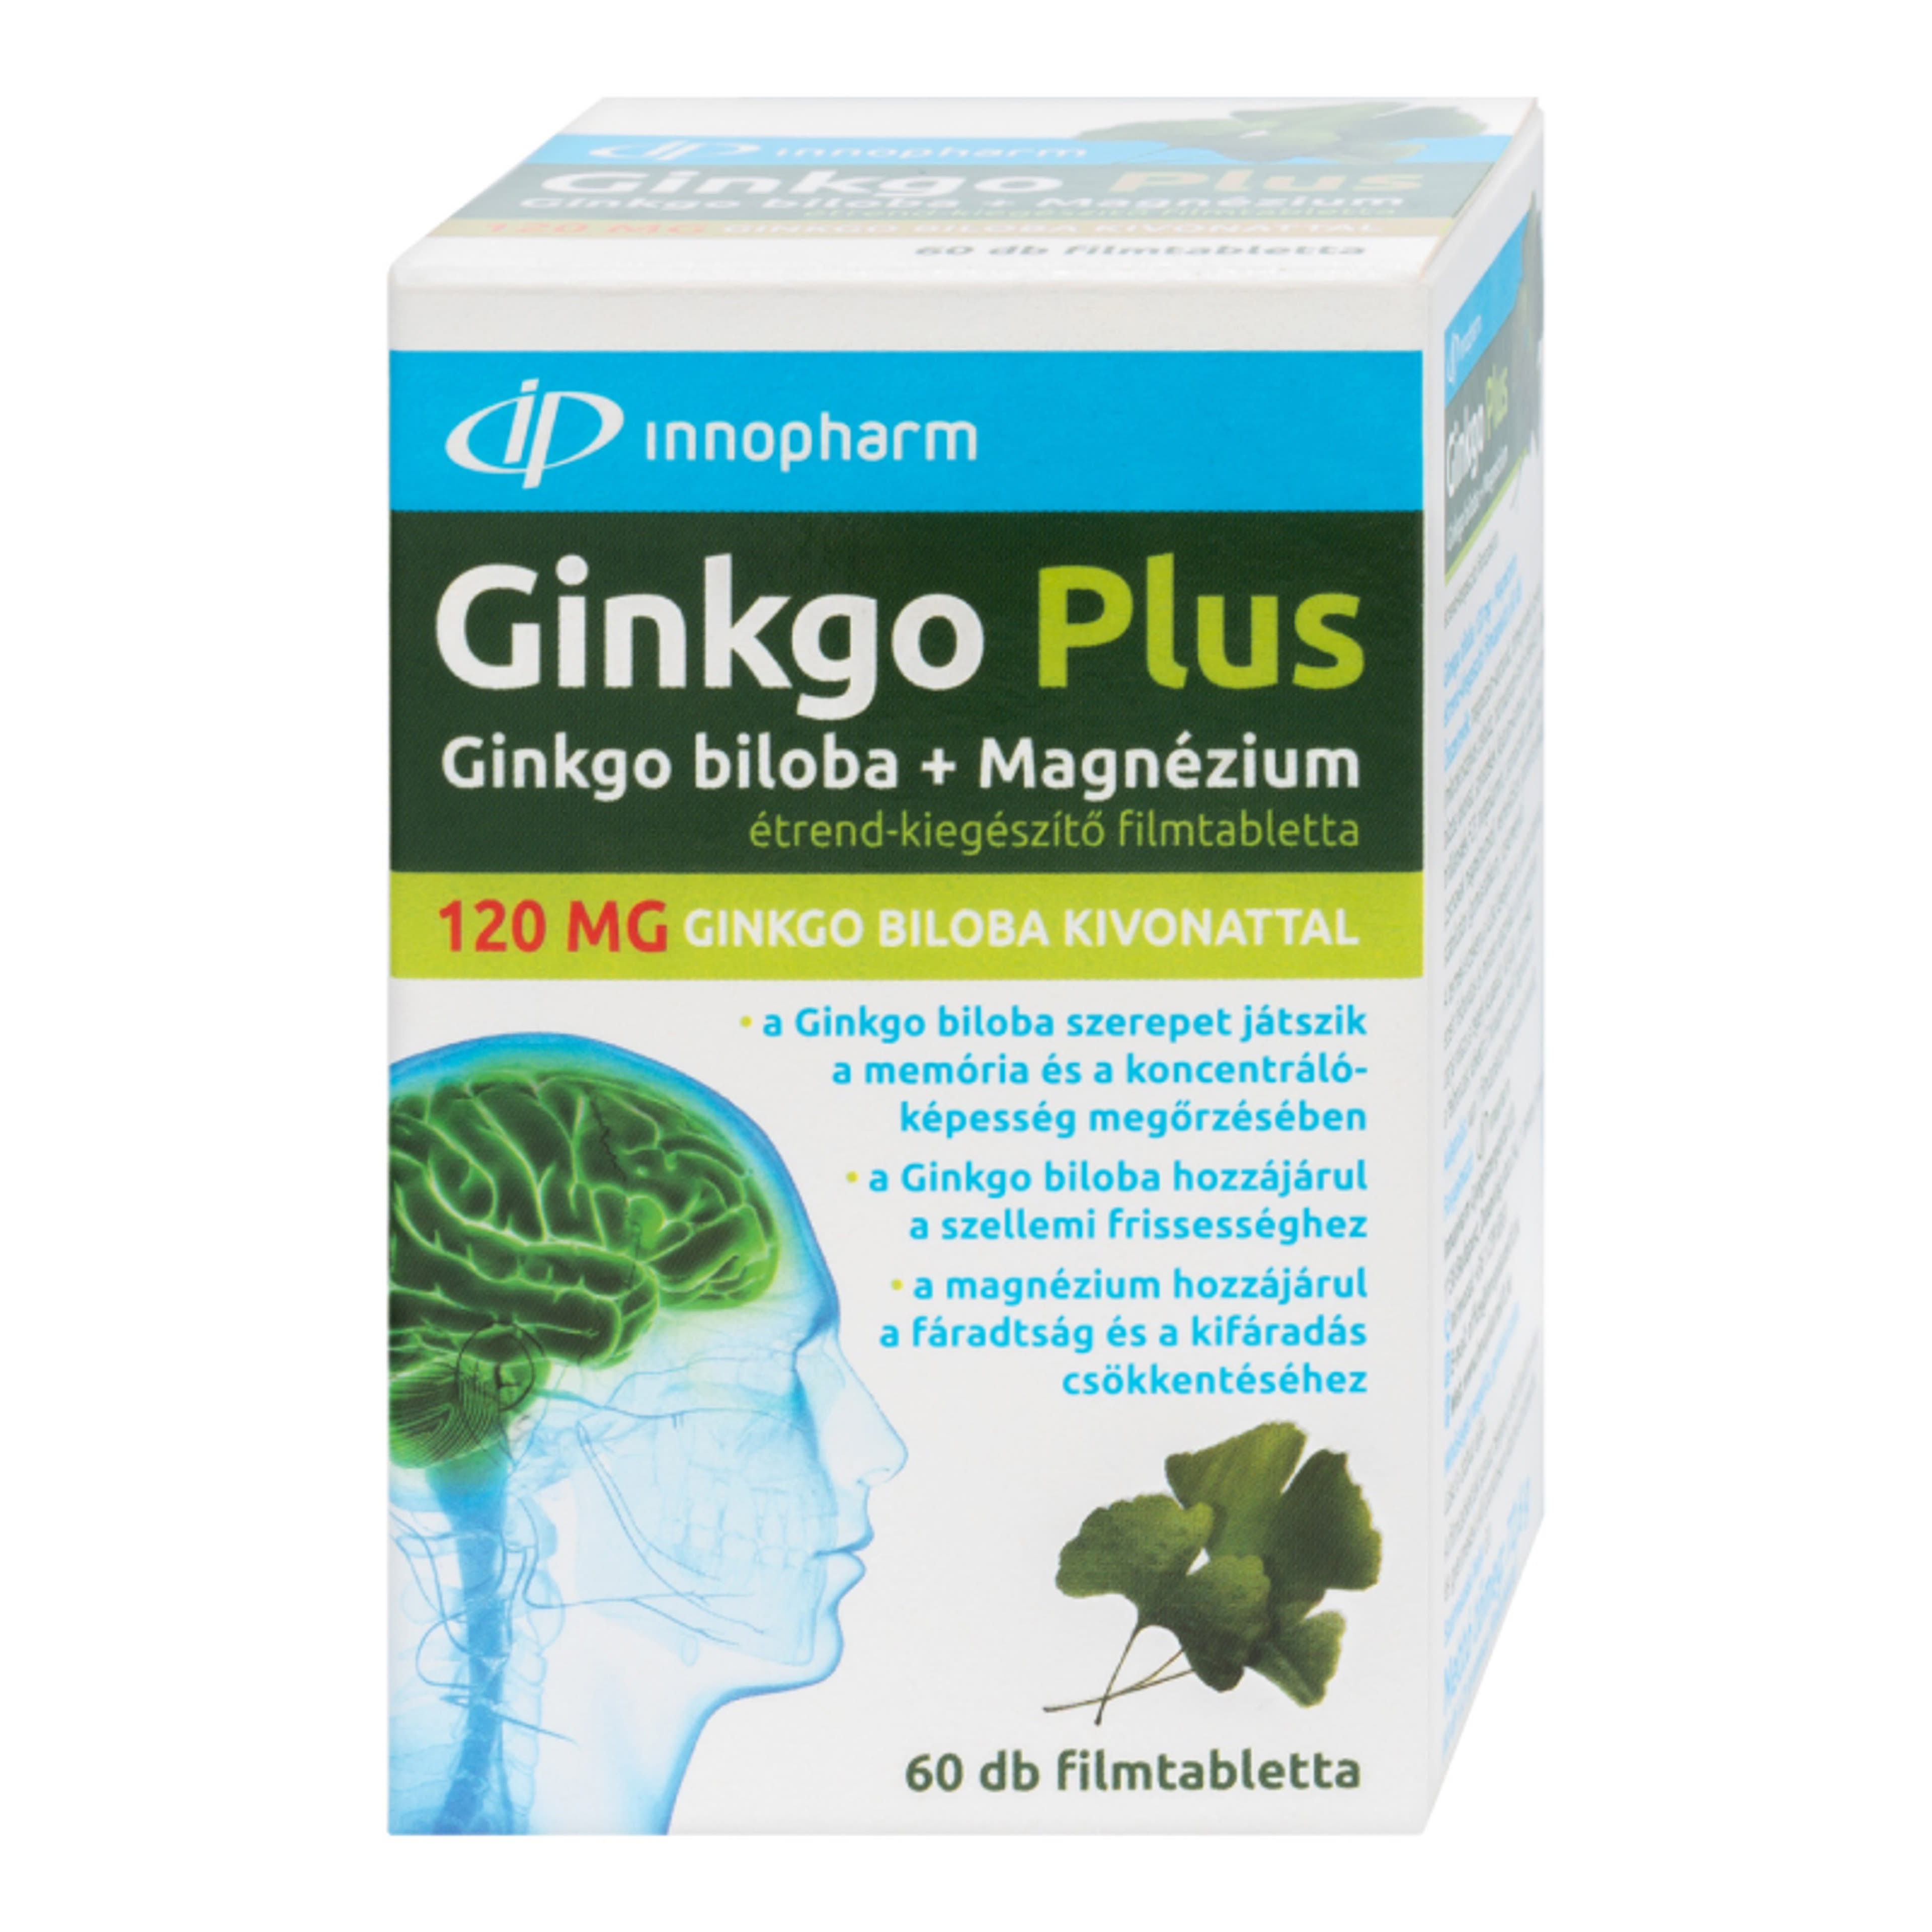 InnoPharm Ginkgo Plus Ginkgo biloba 120 mg + magnézium filmtabletta - 60 db-2